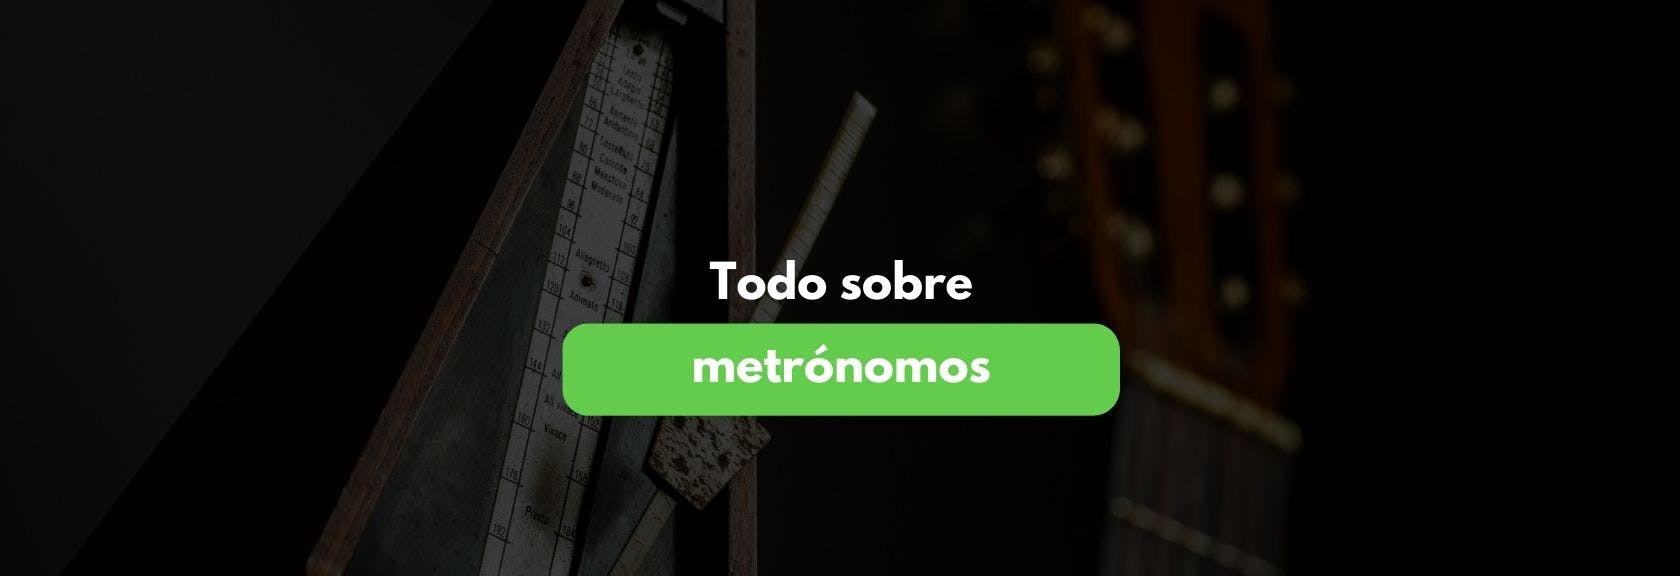 metronomo-online